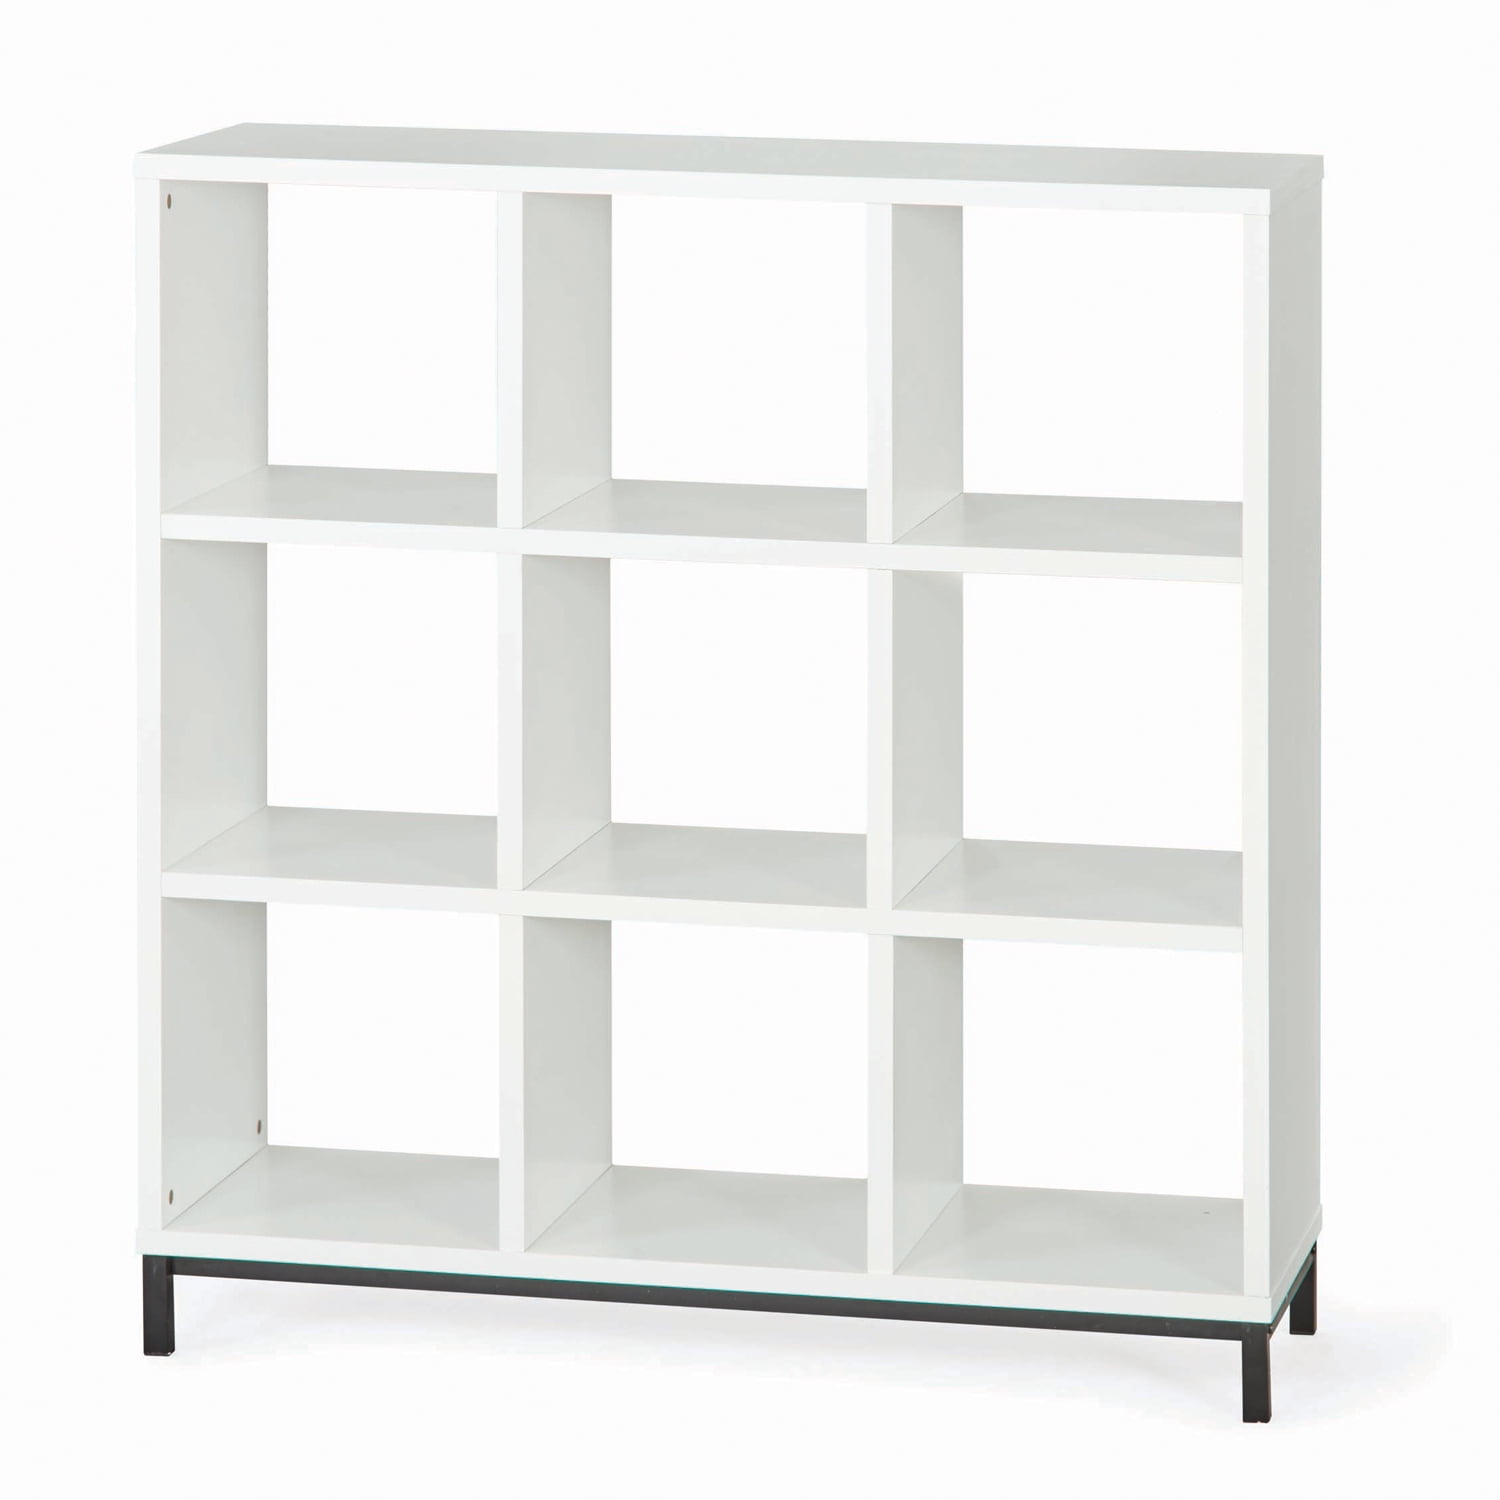 8 Cube Bookcase Bookshelf Storage Shelves Organizer with Metal Base White 